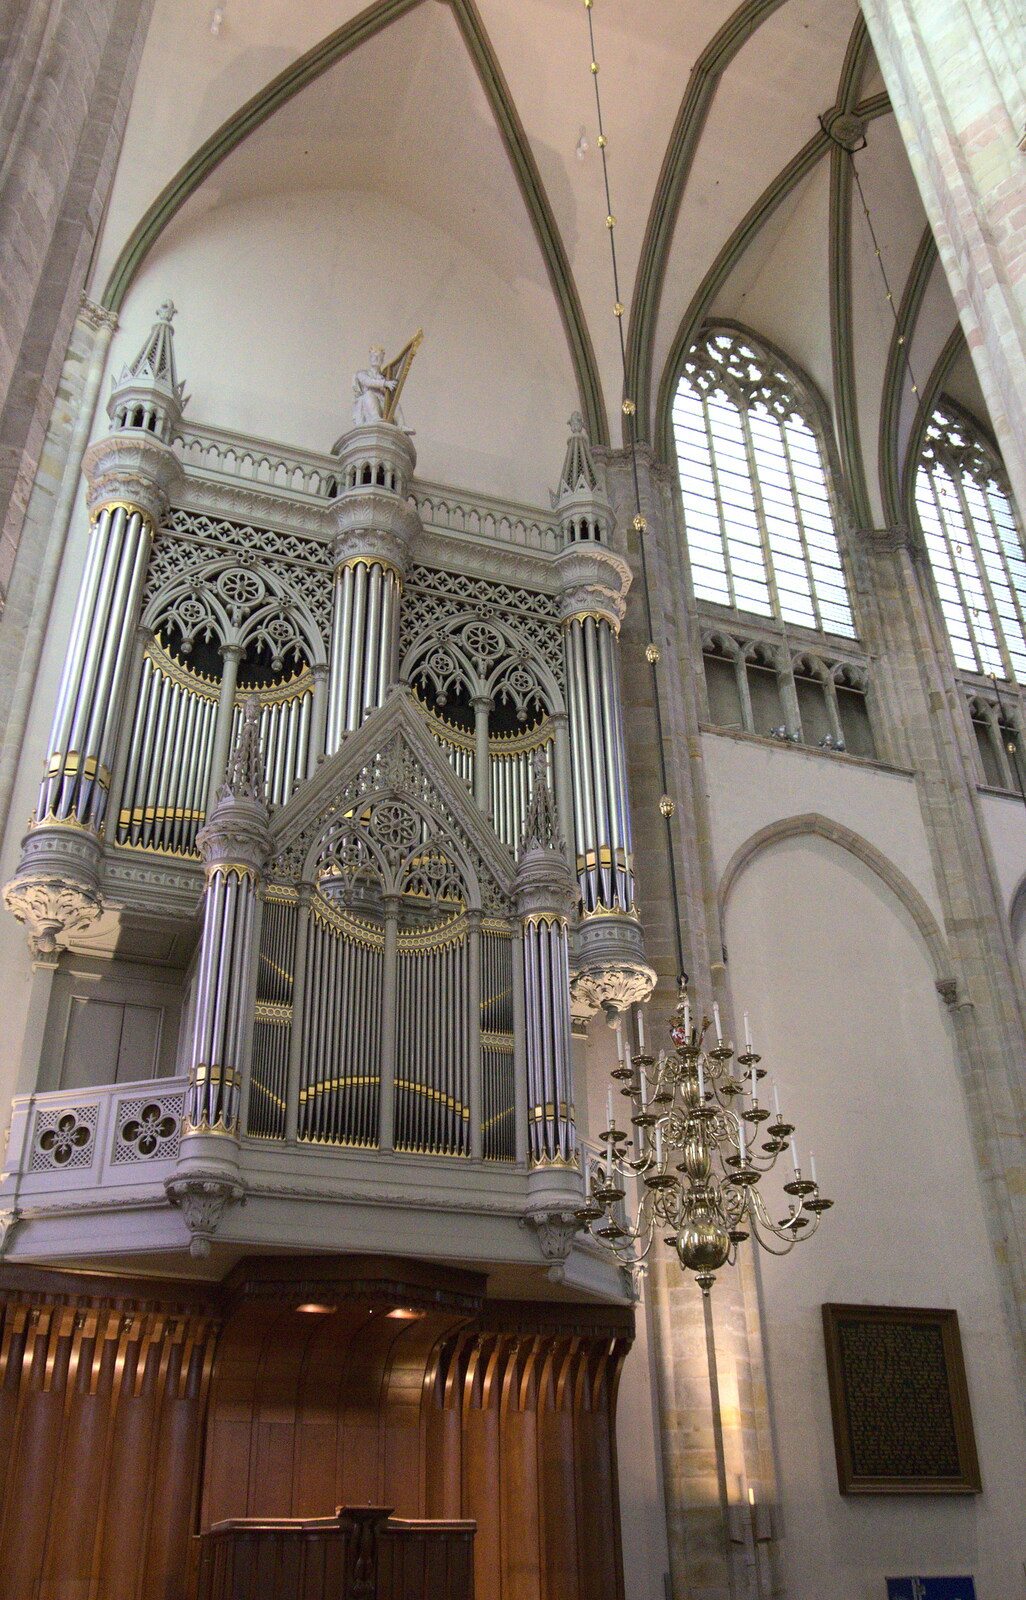 Another epic church organ from A Postcard from Utrecht, Nederlands - 10th June 2018